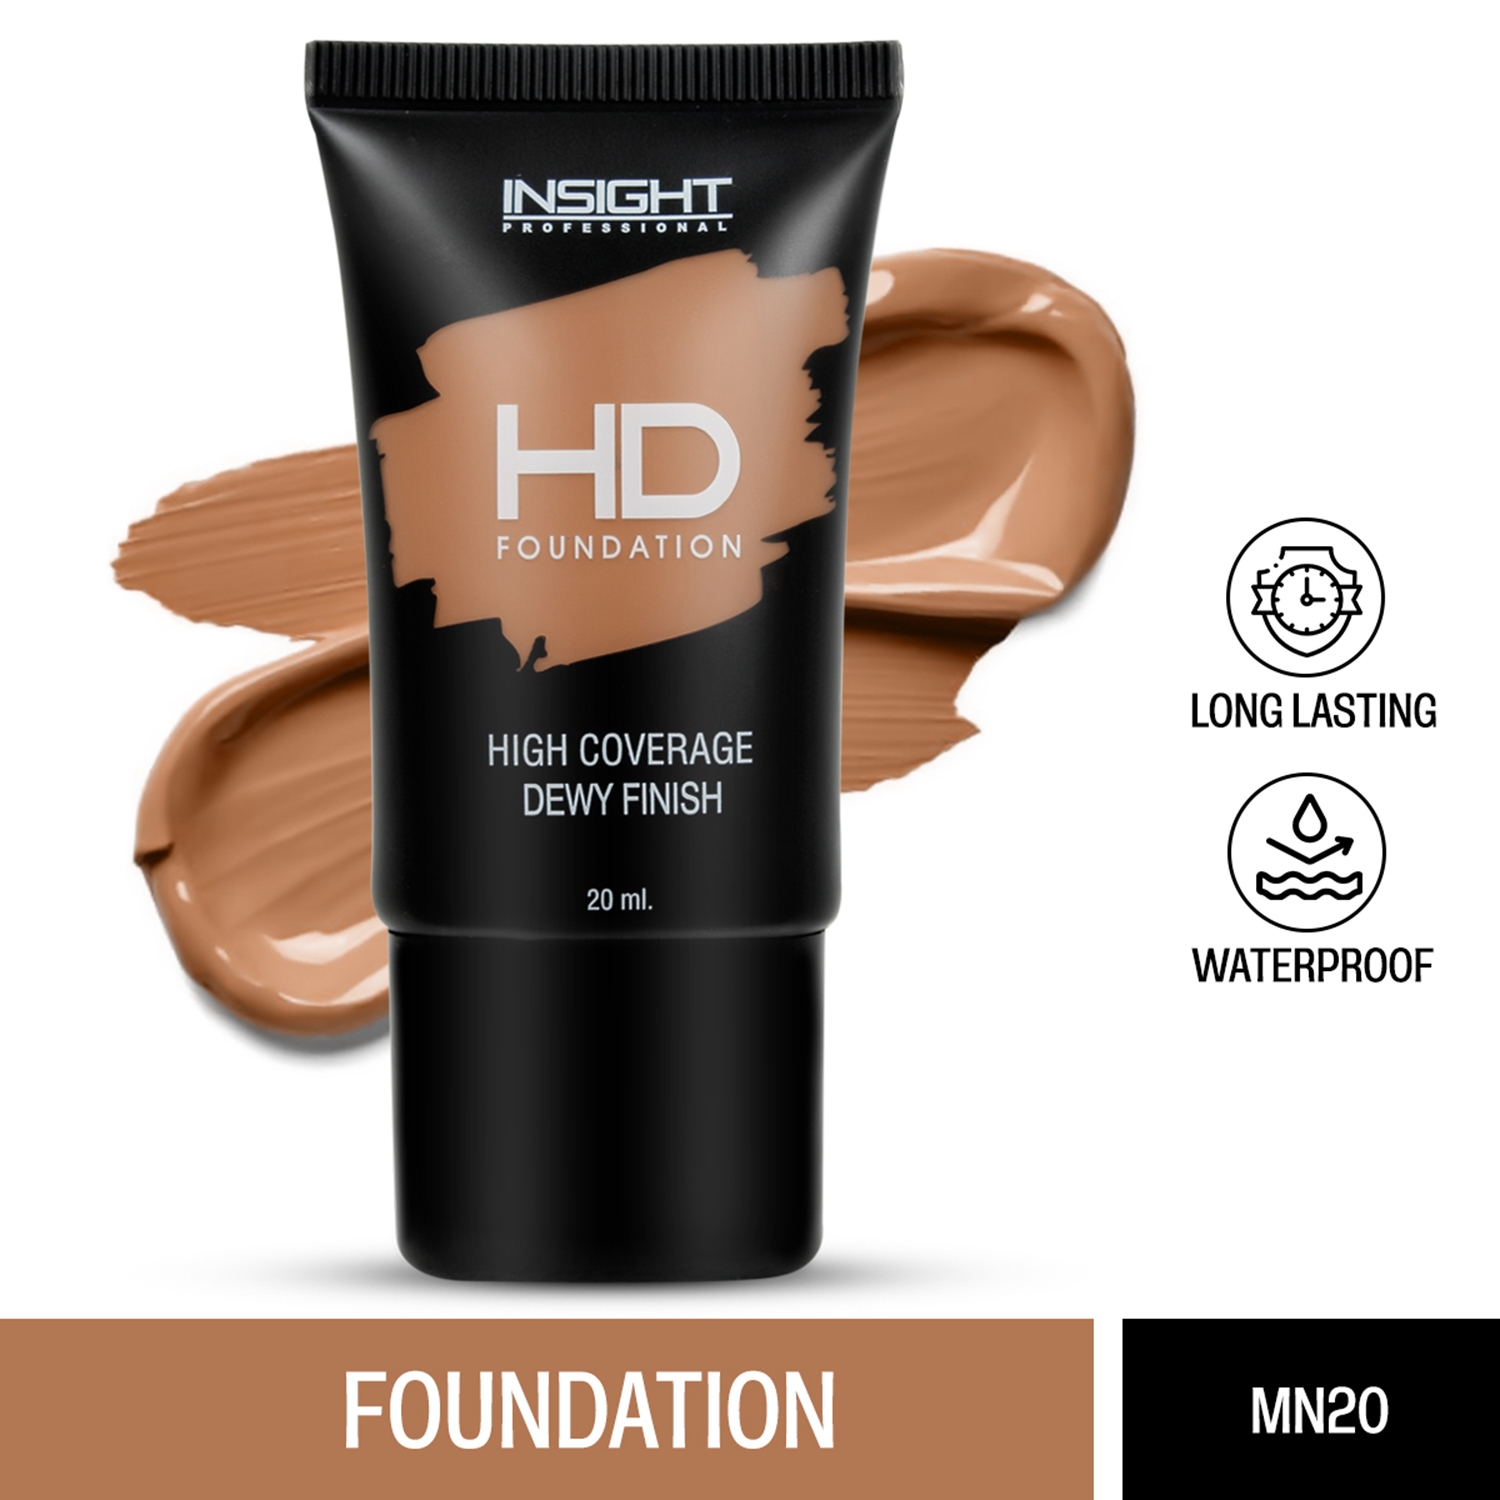 Insight Cosmetics | Insight Cosmetics Dewy Finish Professional HD Foundation - MN 20 (20ml)